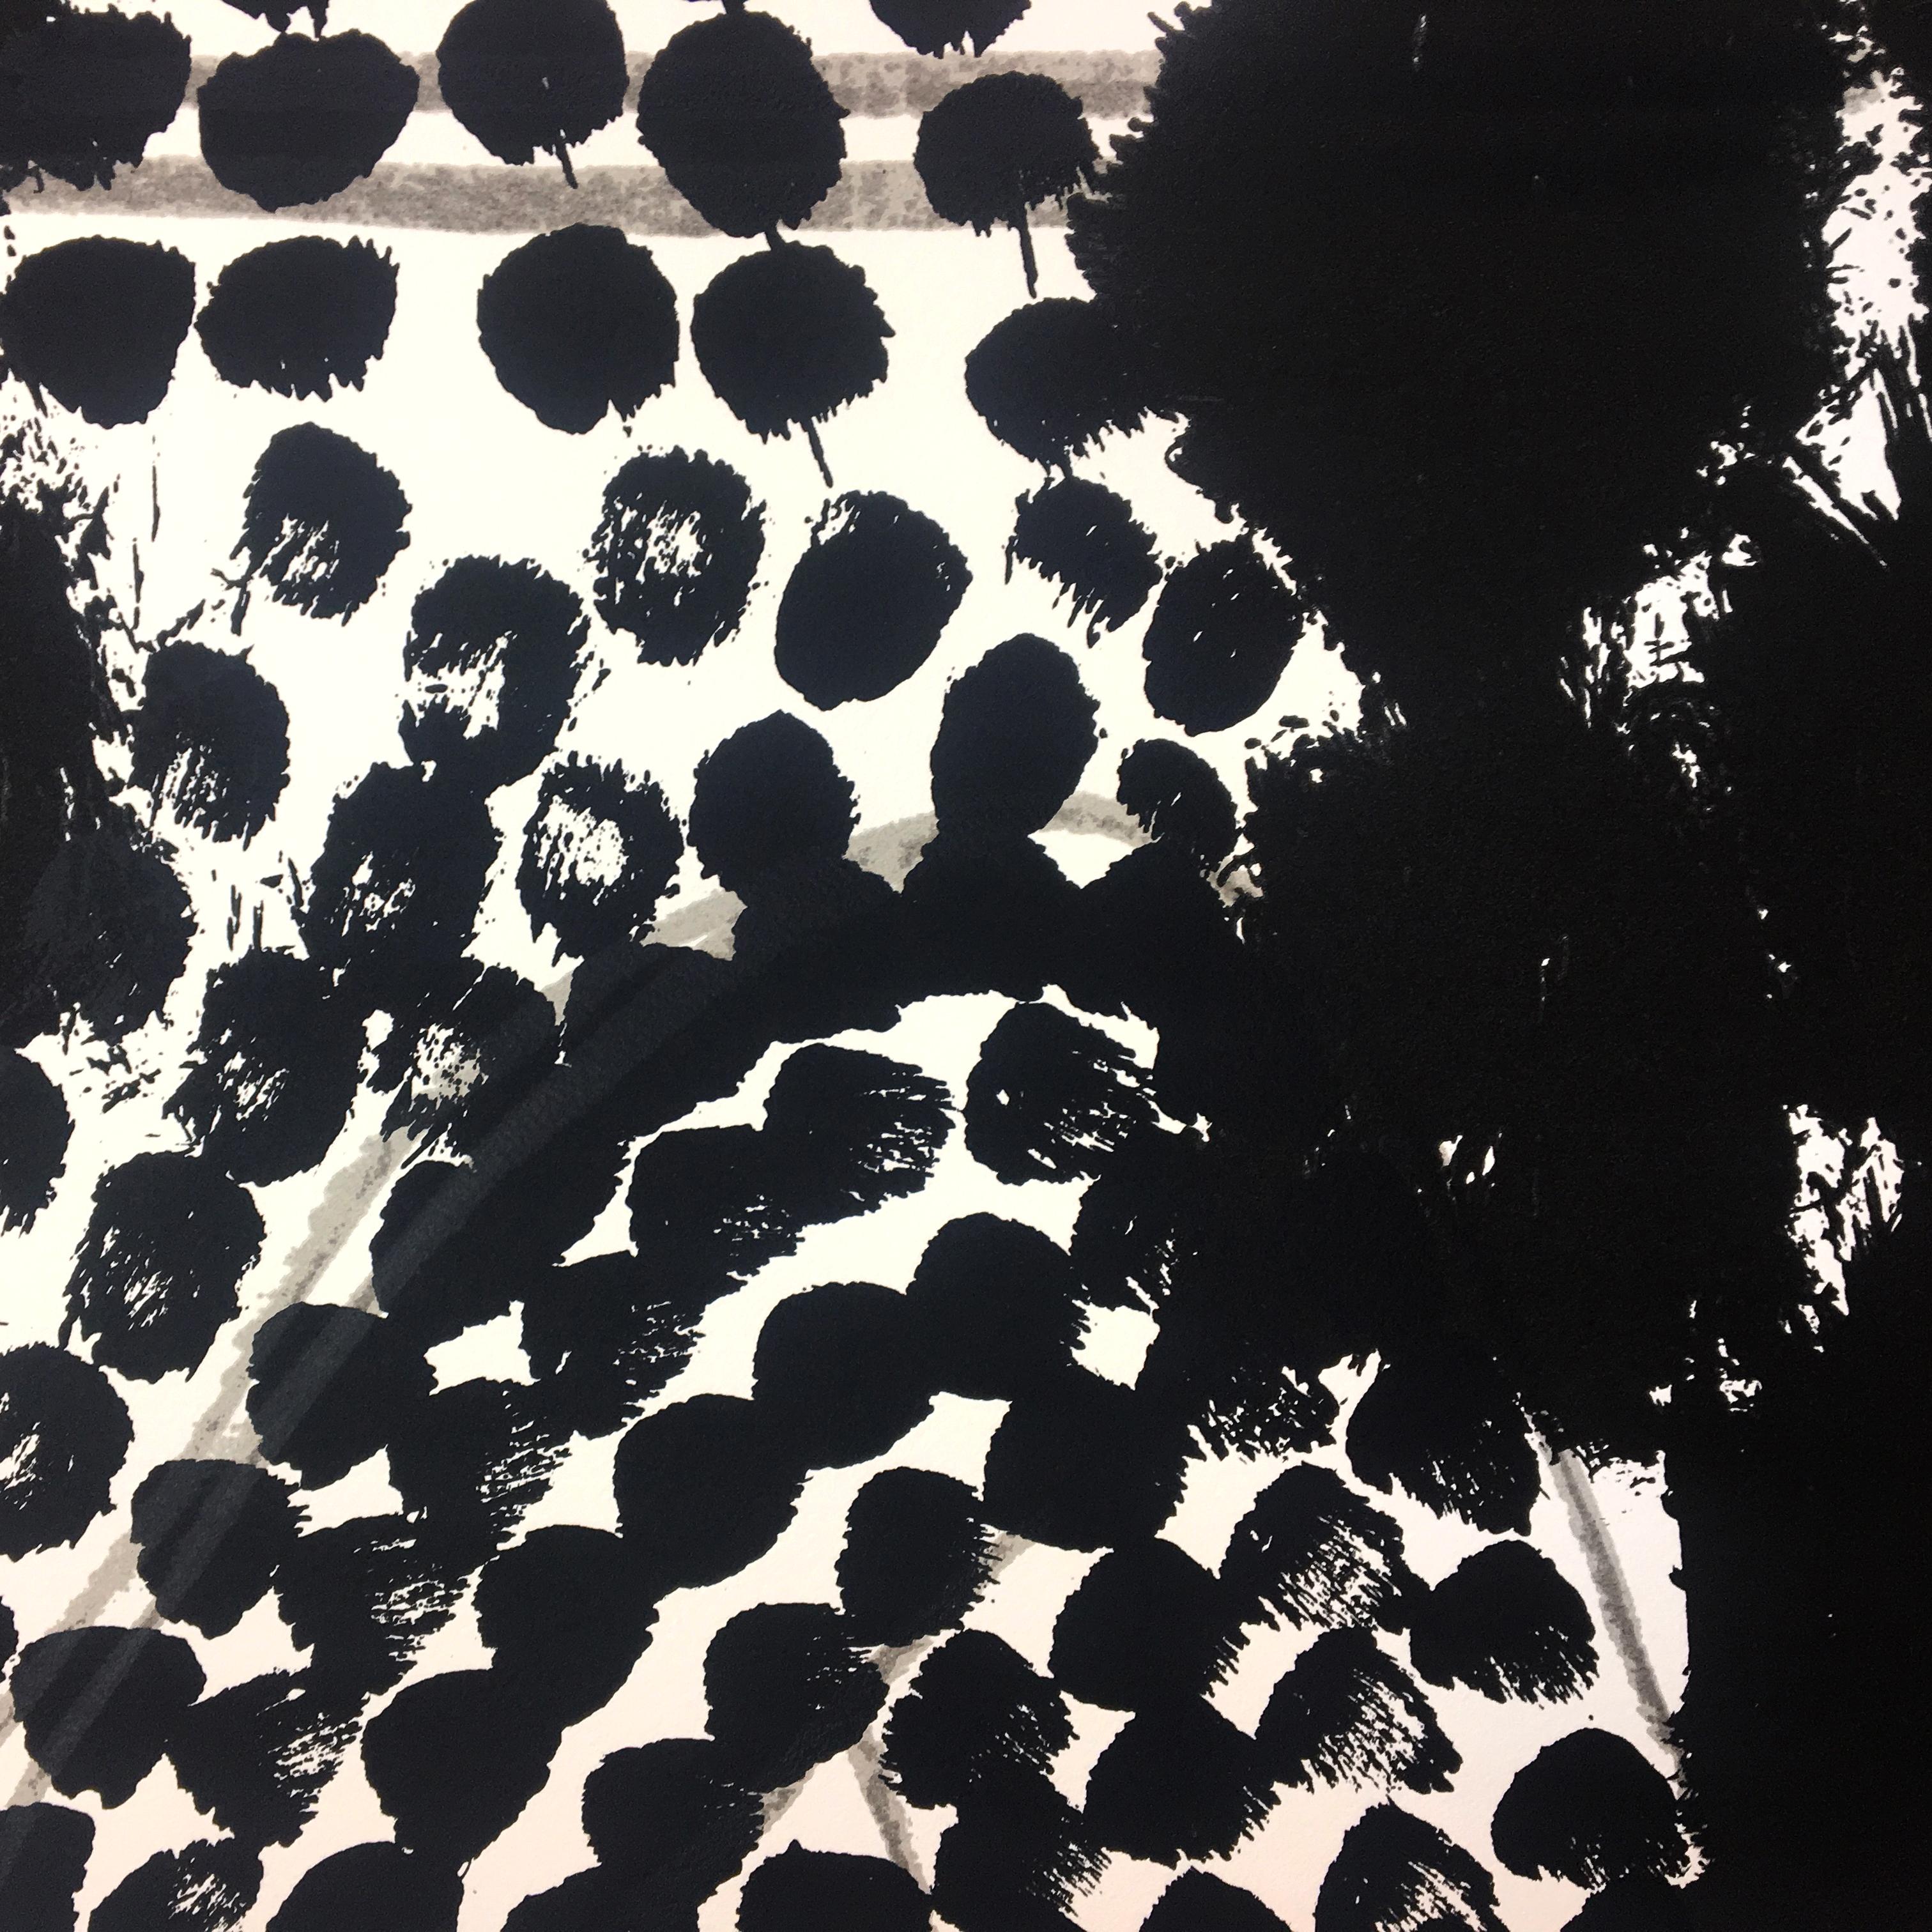 Souvenir, Howard Hodgkin: large scale black white gray abstract interior scene  1